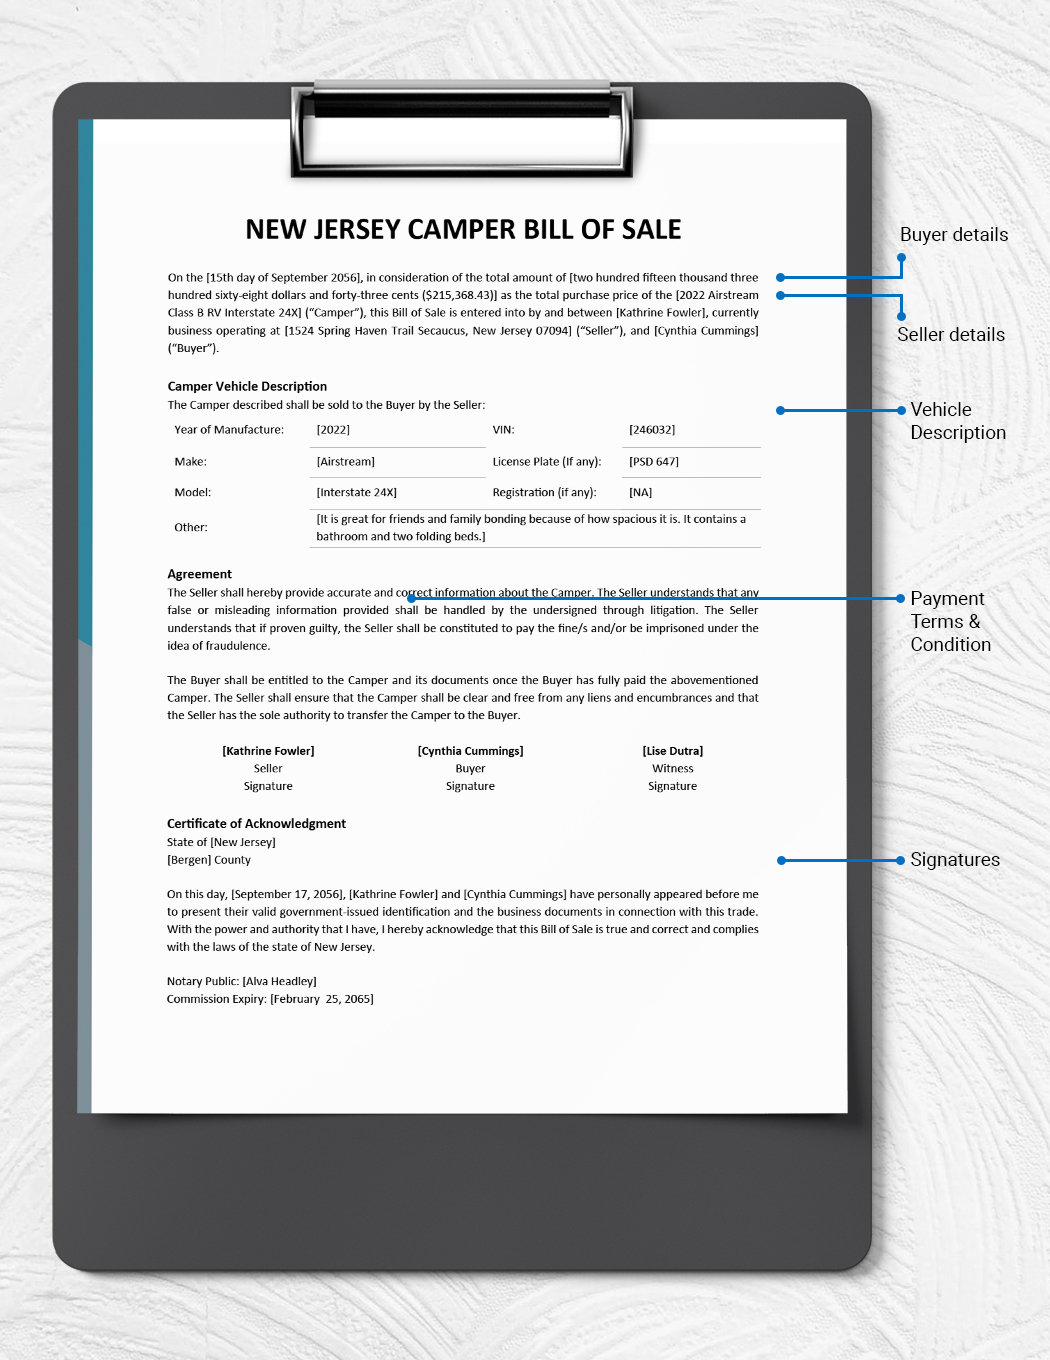 New Jersey Camper Bill of Sale Template